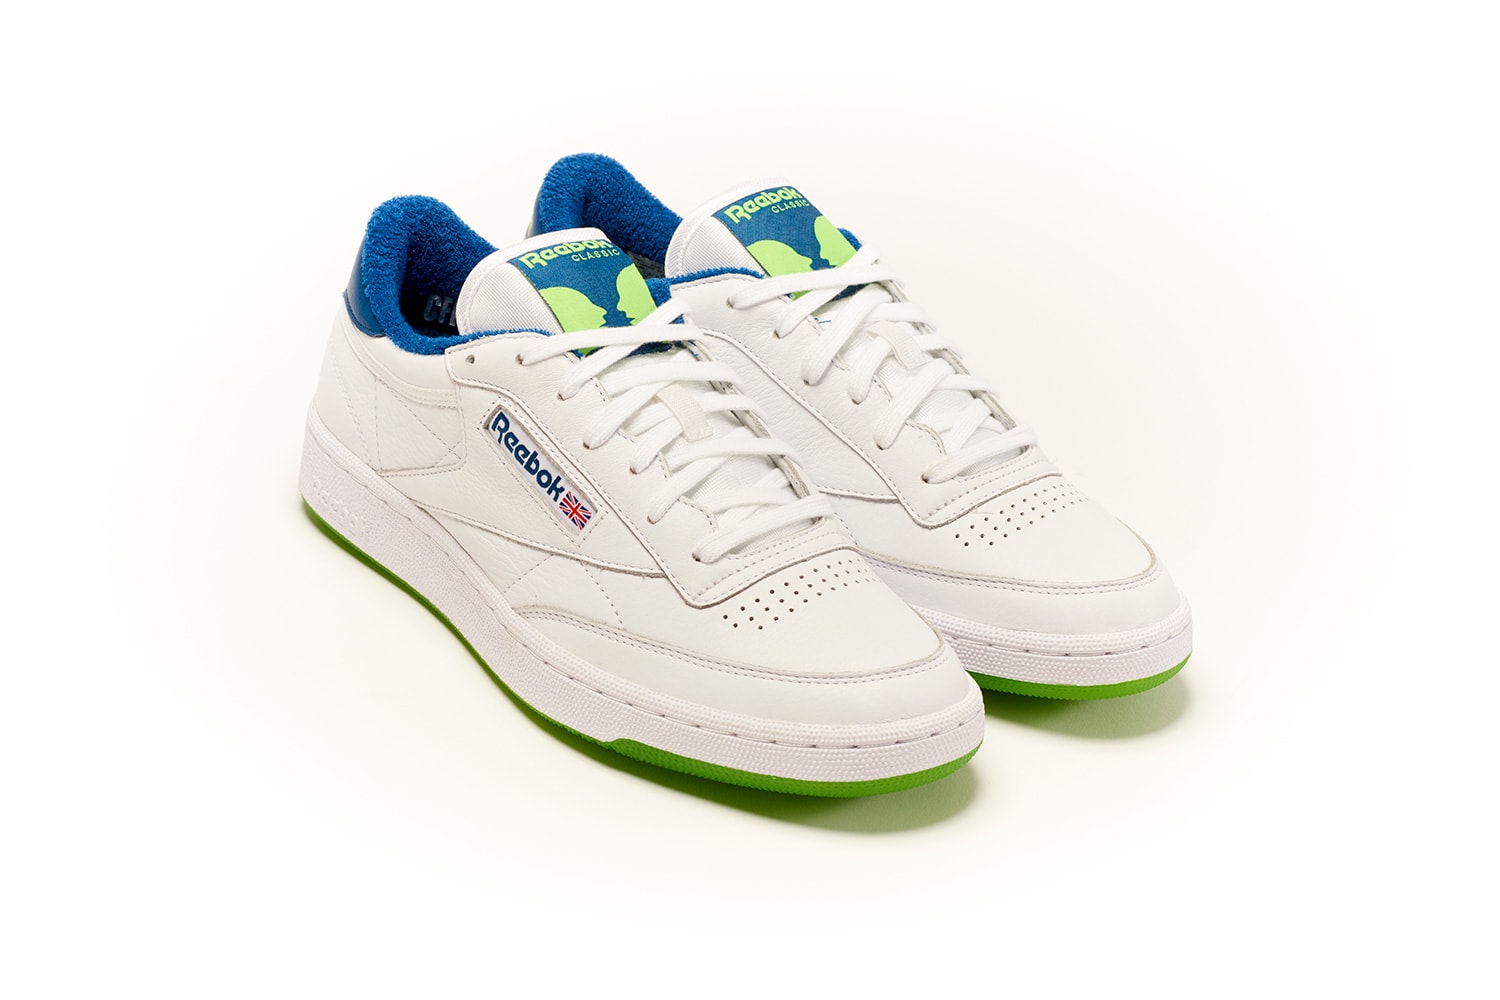 Bronze56K x Reebok Club C Release date sneaker collaboration buy online price info skate white blue green